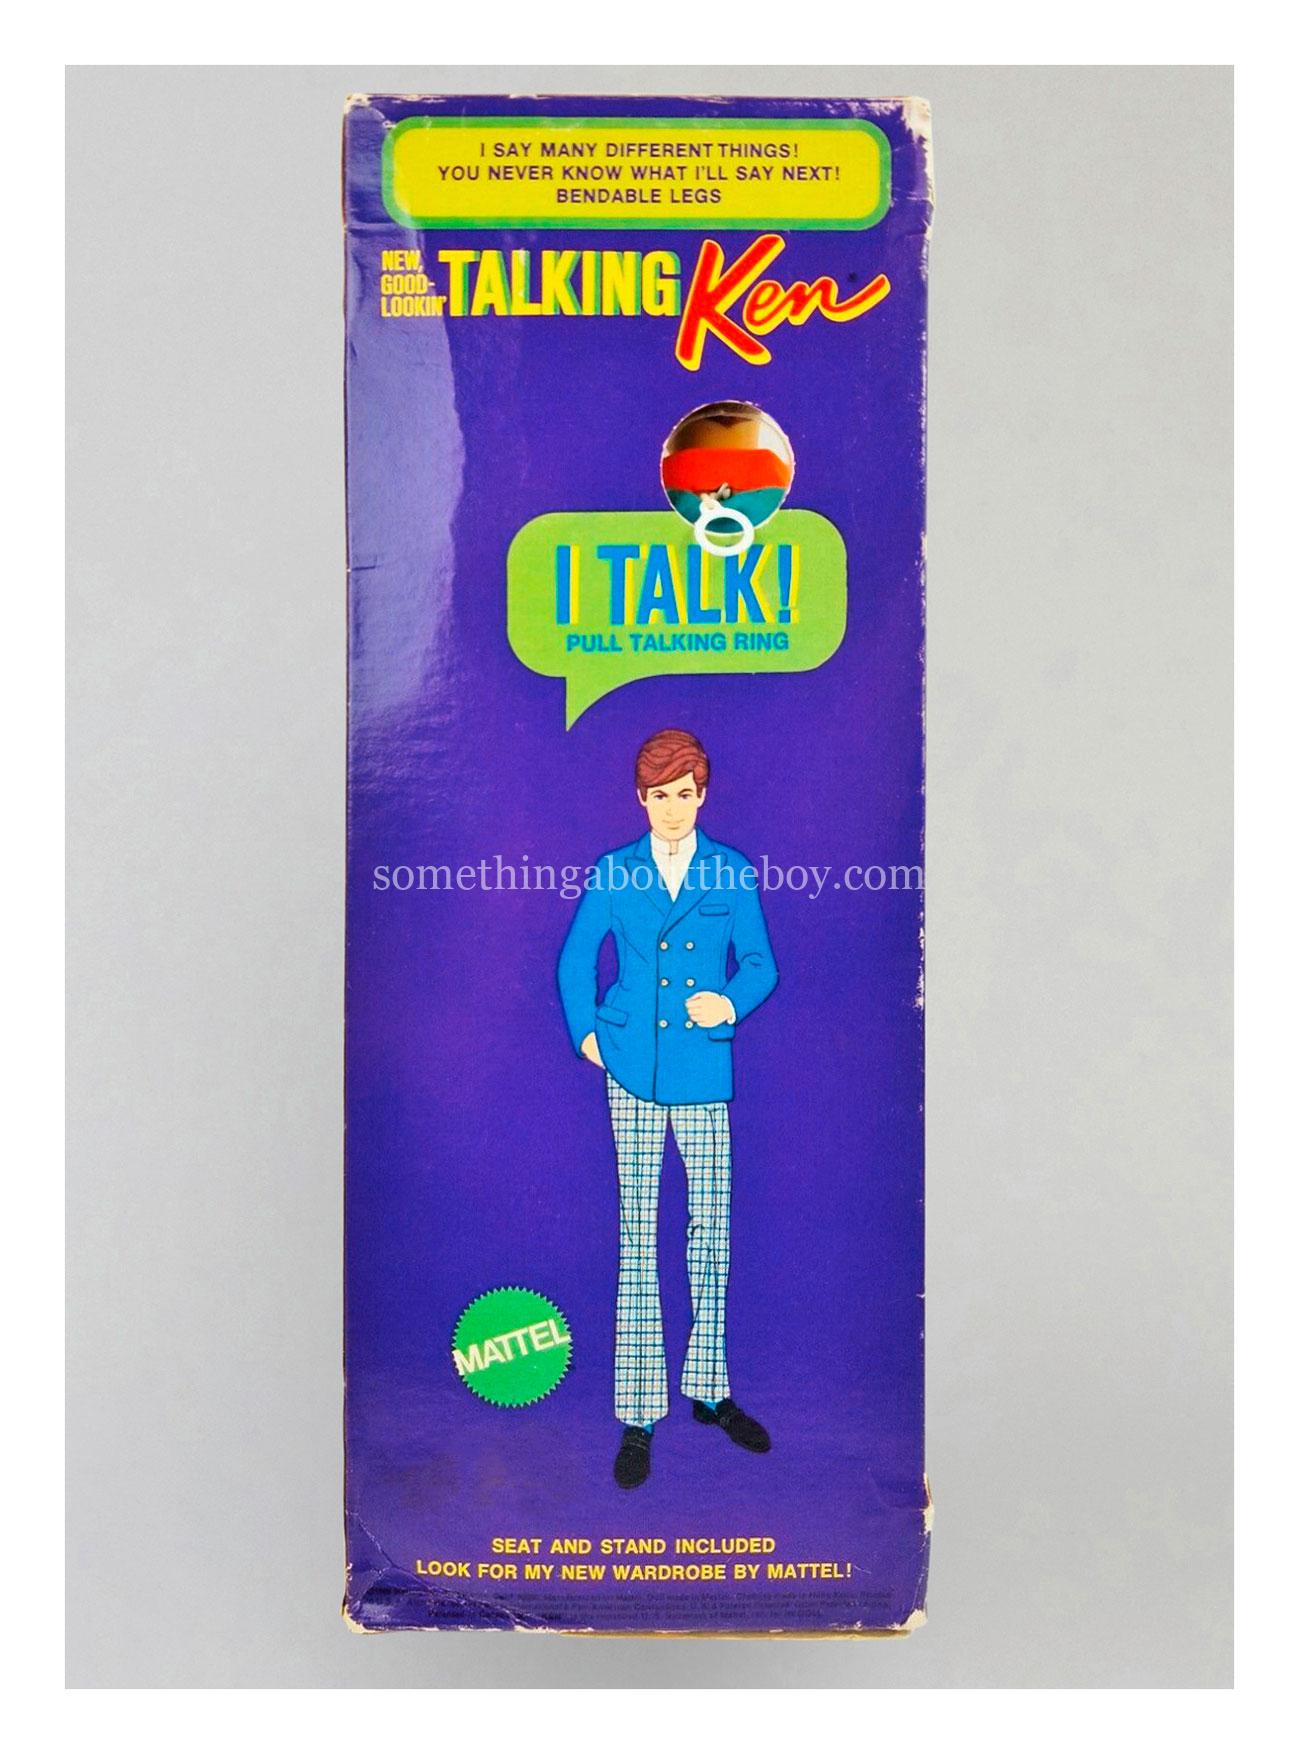 1970 #1111 New Good-Lookin' Talking Ken packaging